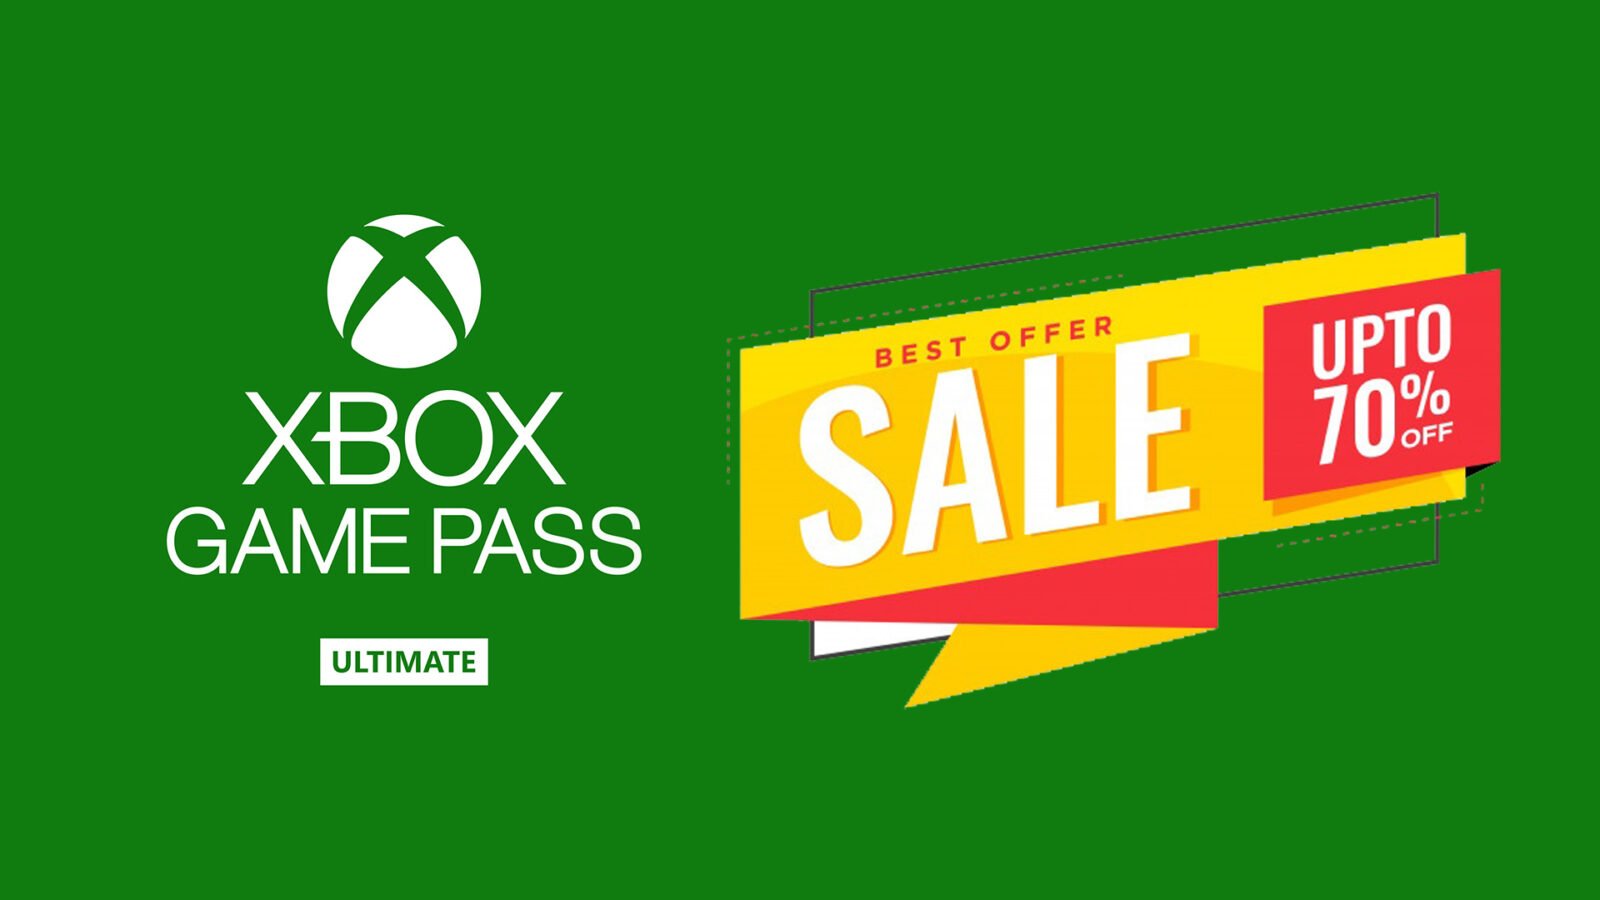 xbox game pass 12 months price